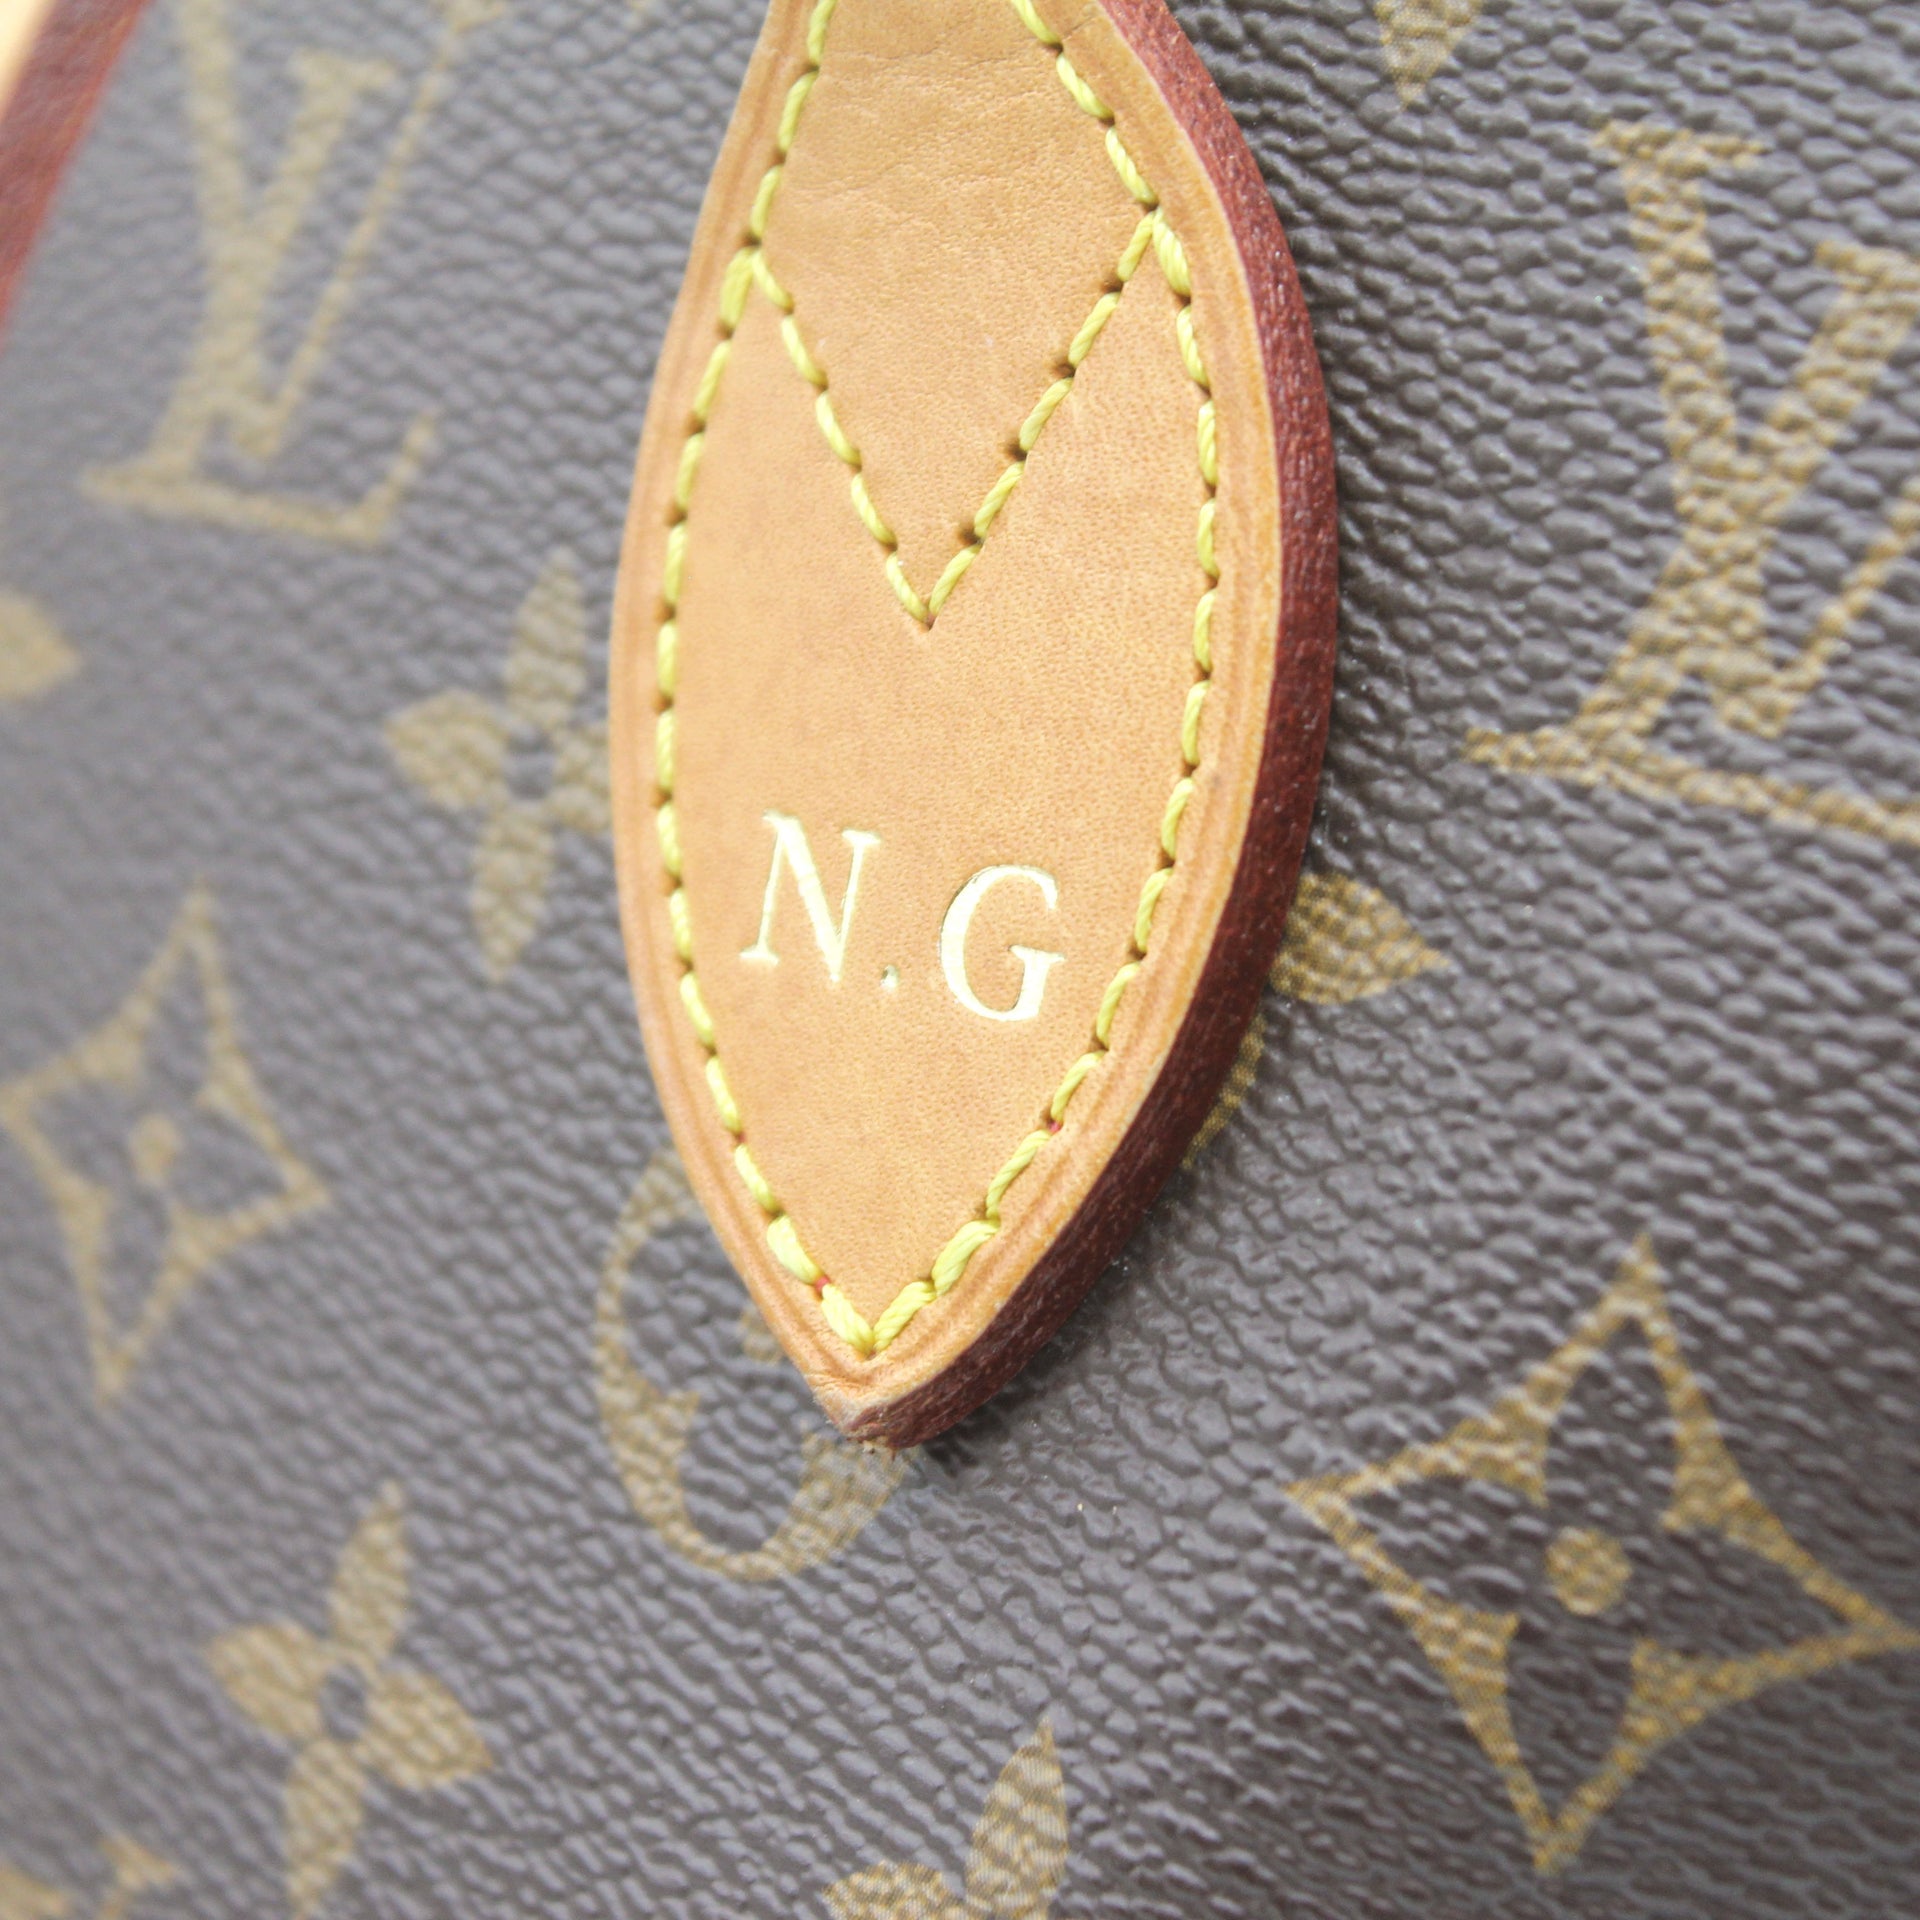 Louis Vuitton Neverfull MM Monogram authentic Used